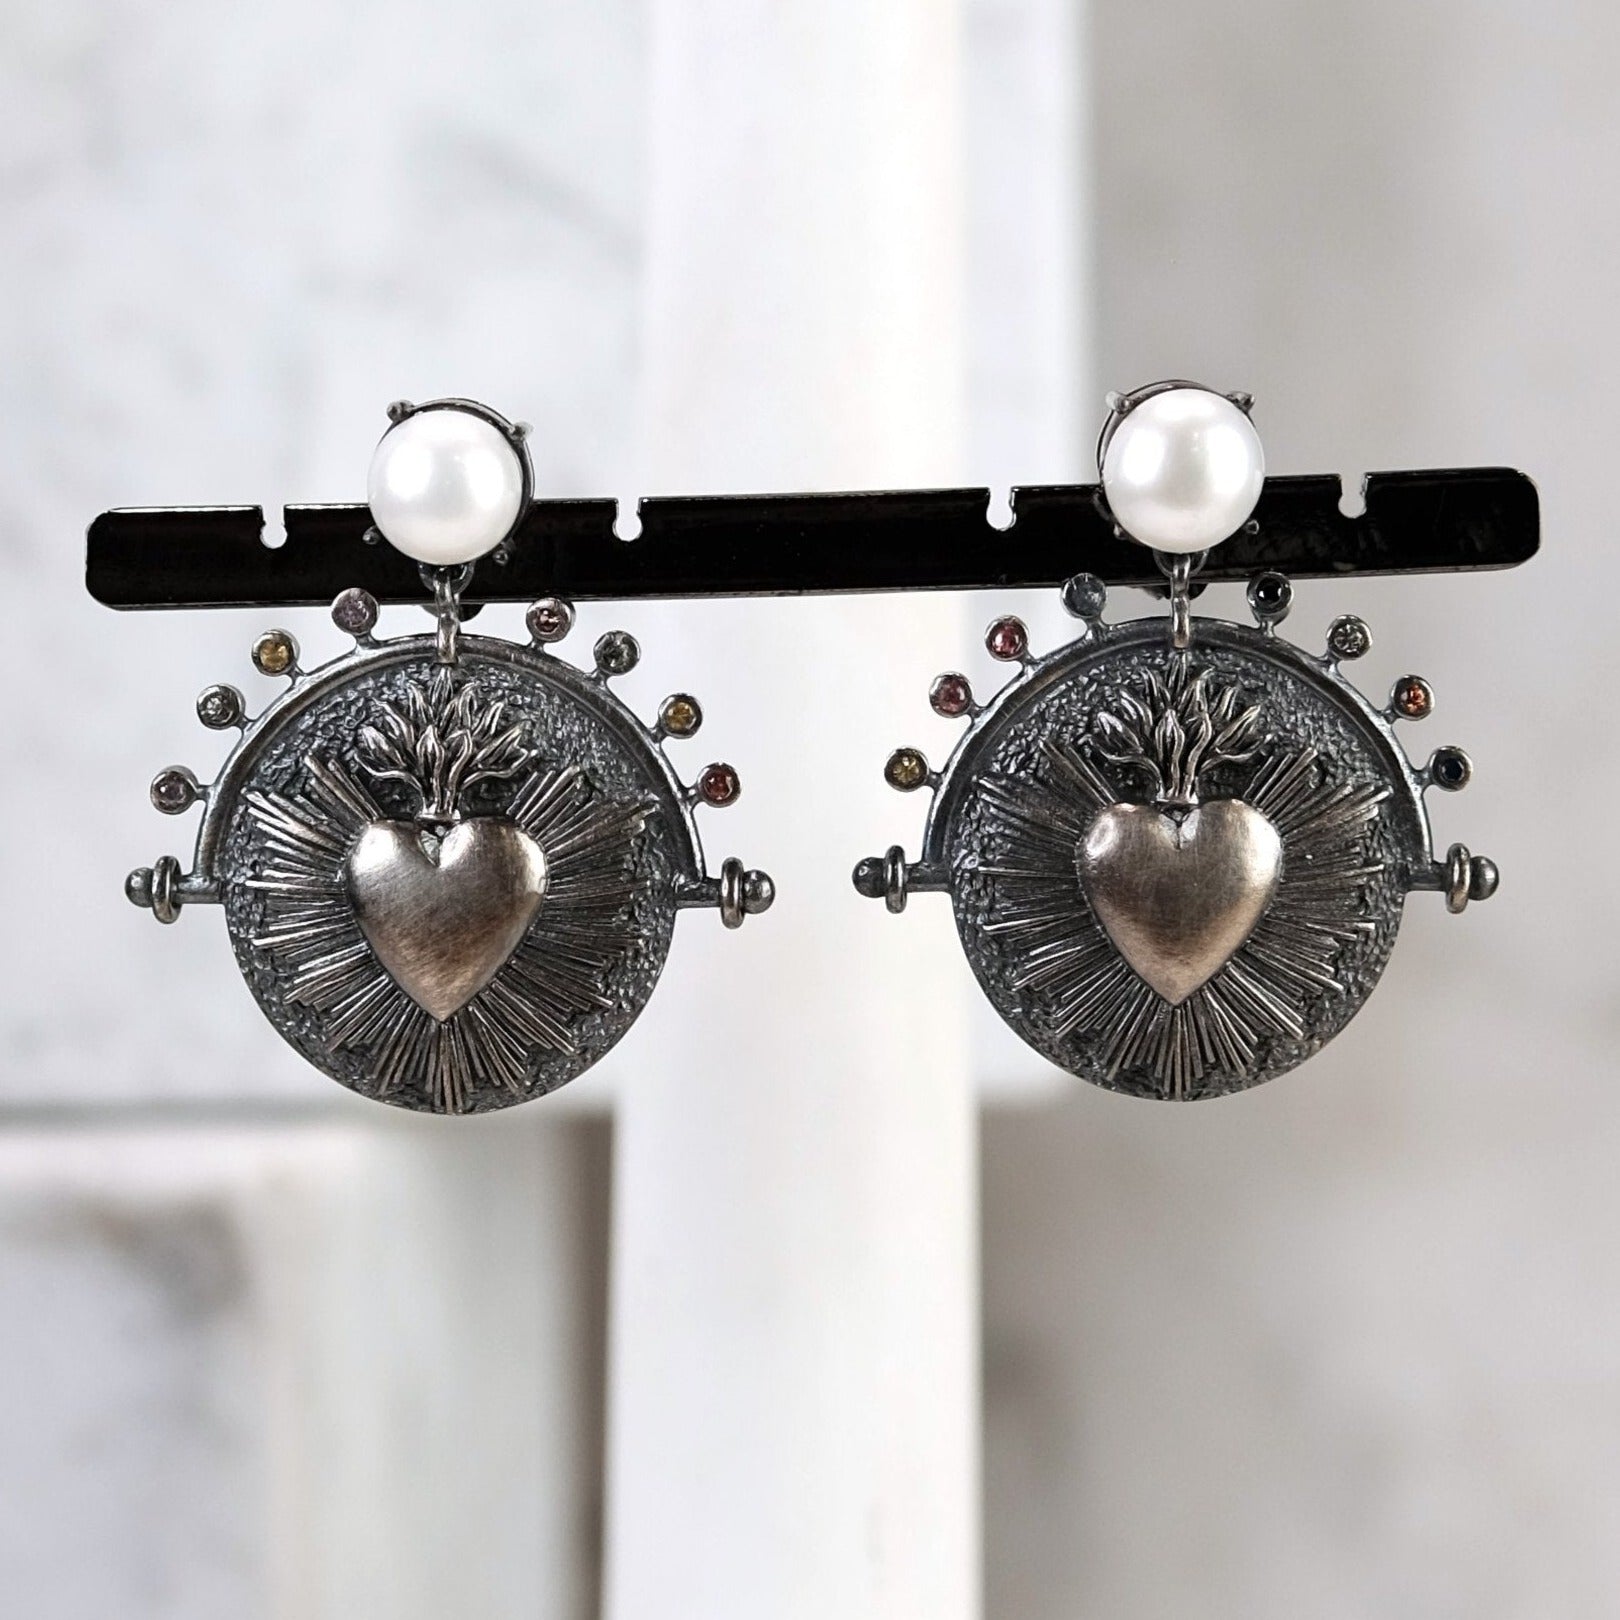 The Madstone sacred heart earrings